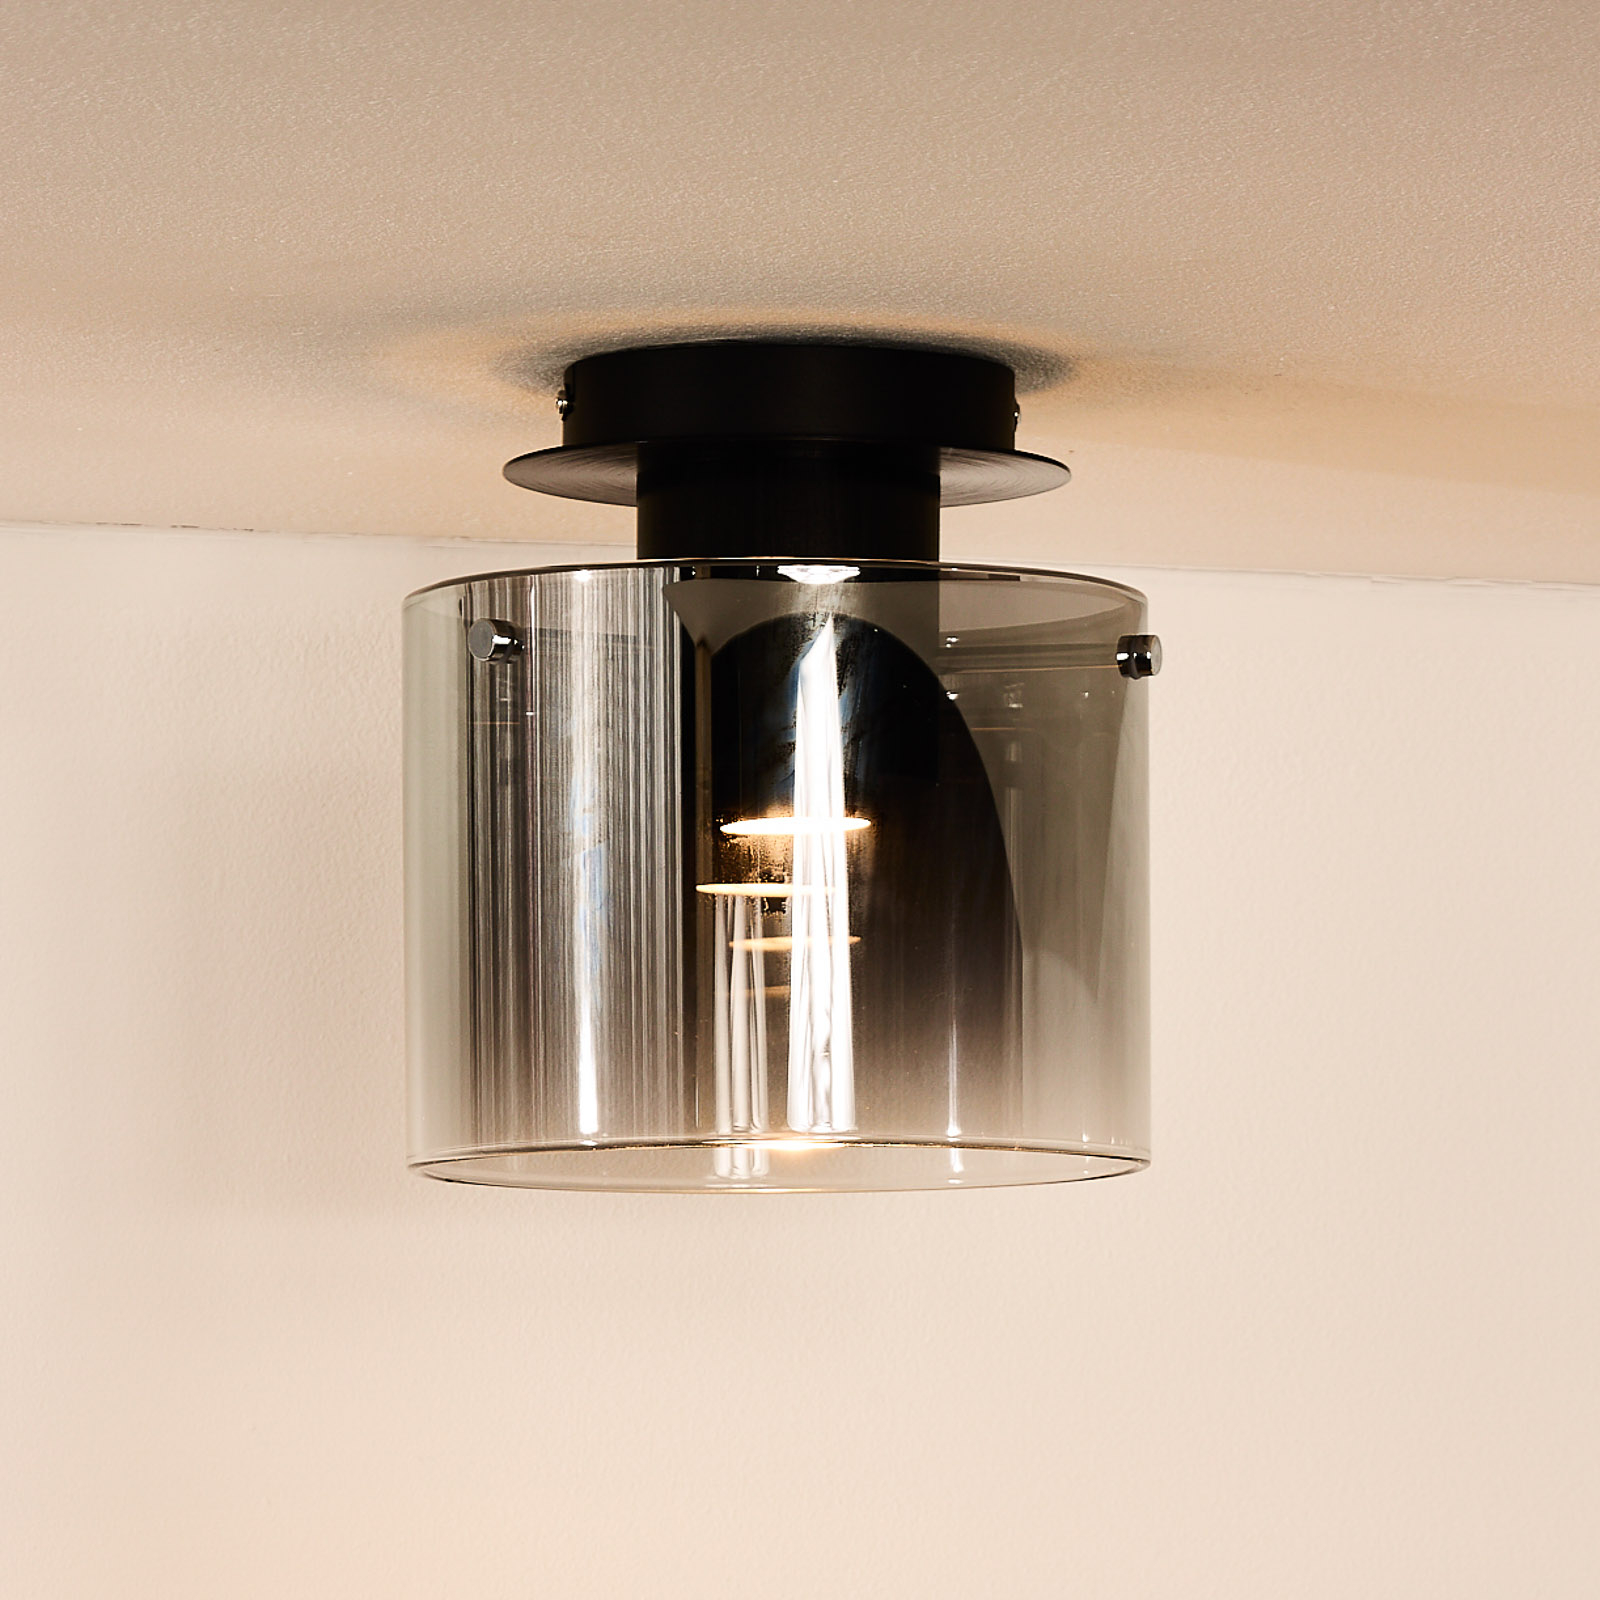 worm Gelovige Wereldvenster Owino LED ceiling light with a mirror effect | Lights.ie